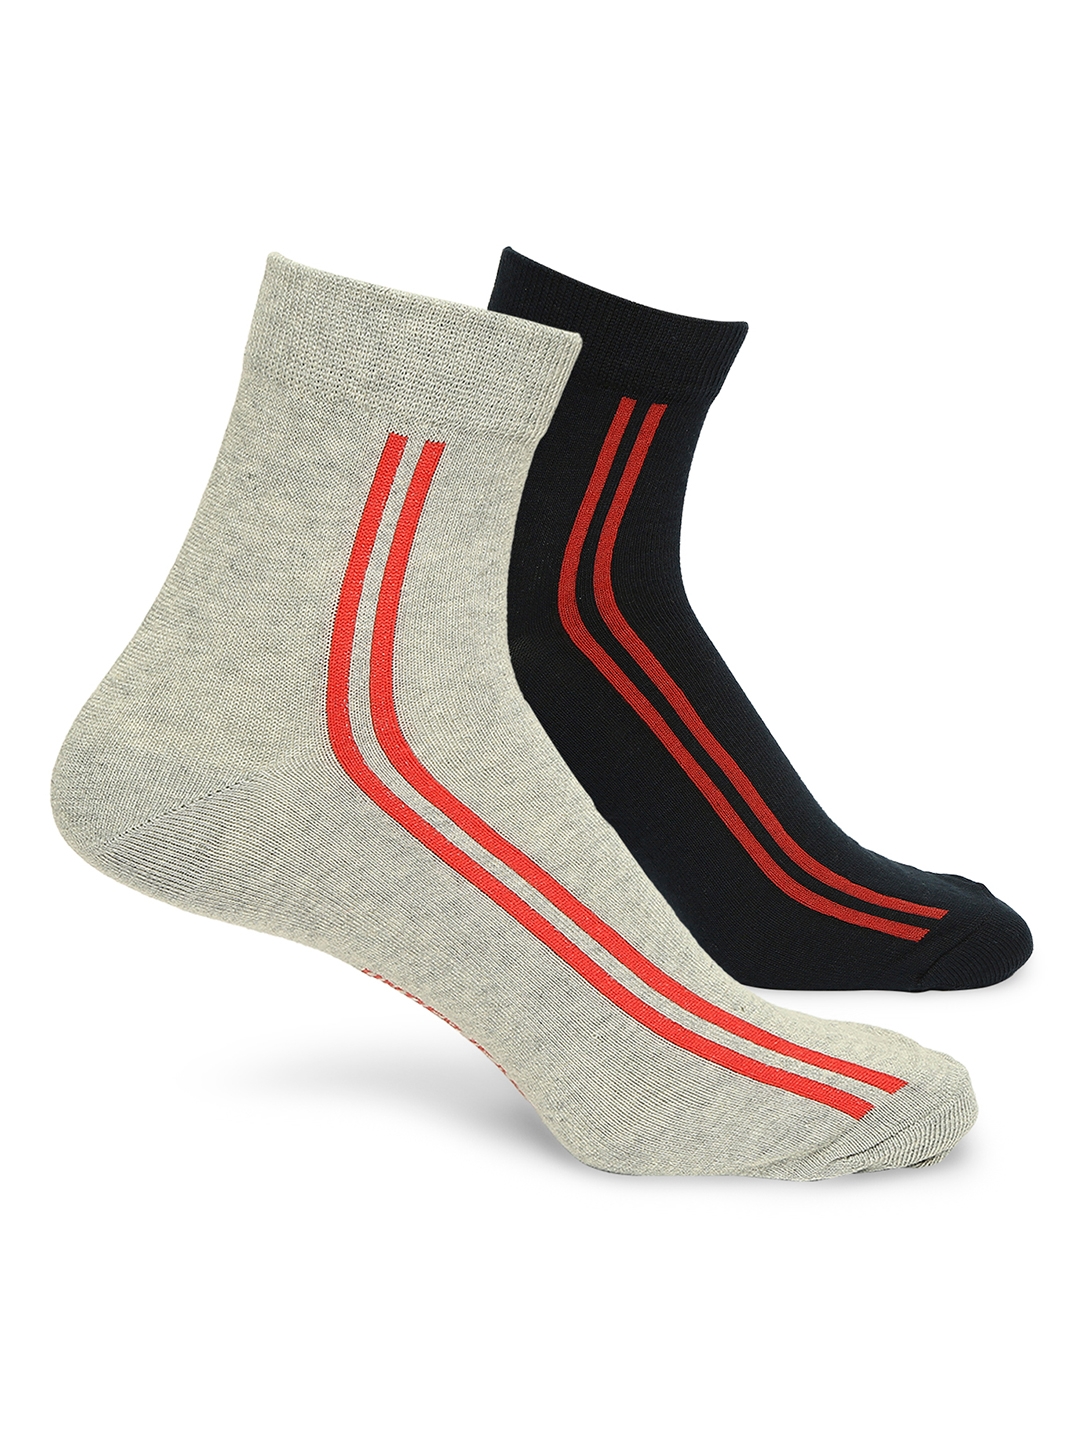 Underjeans by Spykar Premium Navy & Grey Melange Ankle Length Socks - Pack Of 2